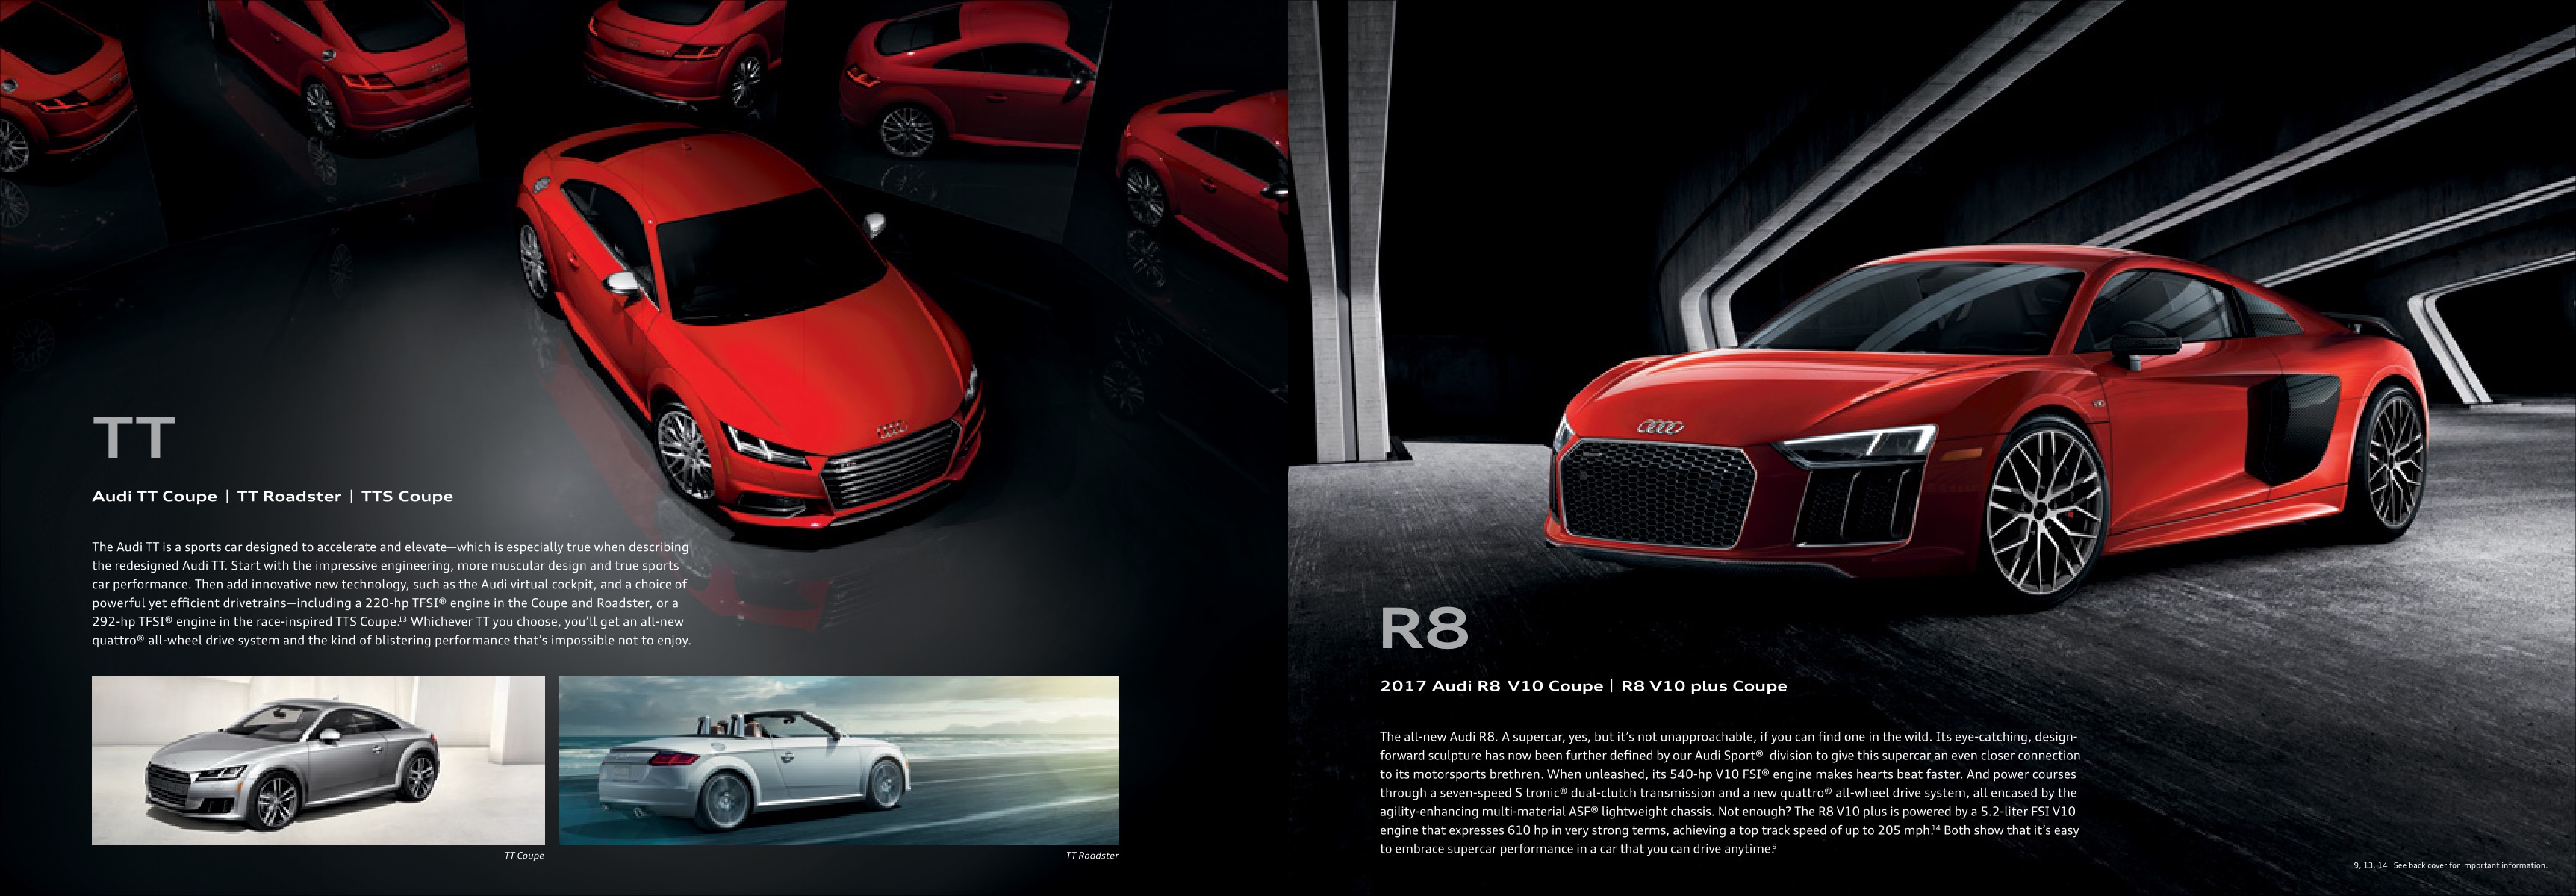 2016 Audi Brochure Page 1